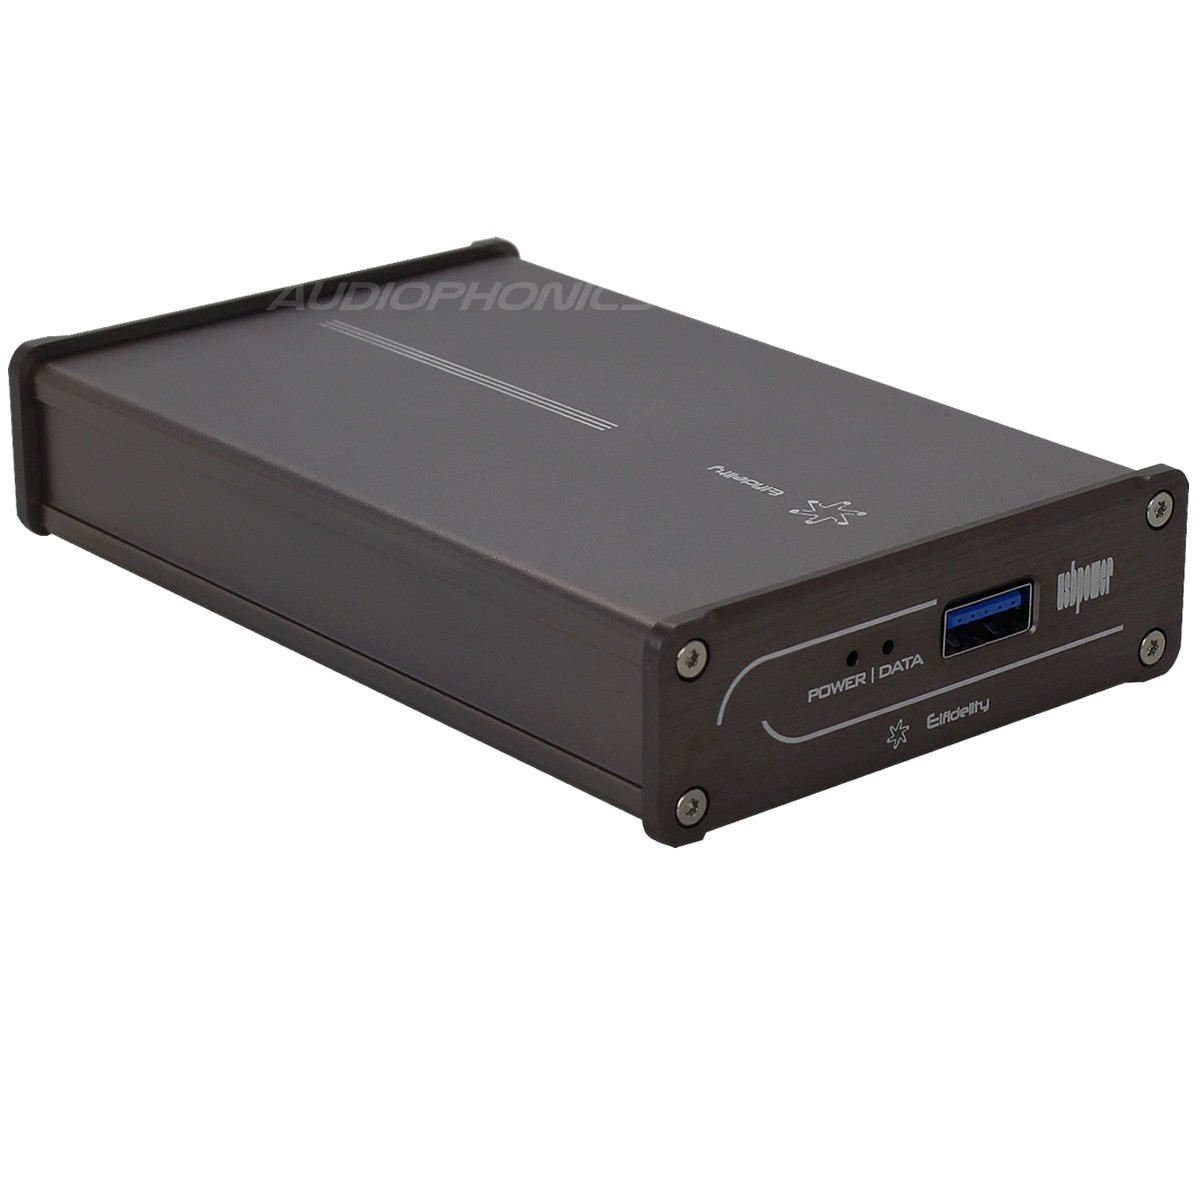 ElFIDELITY AXF-101 Ultra external USB 3.0 Booster Power Filter for PC